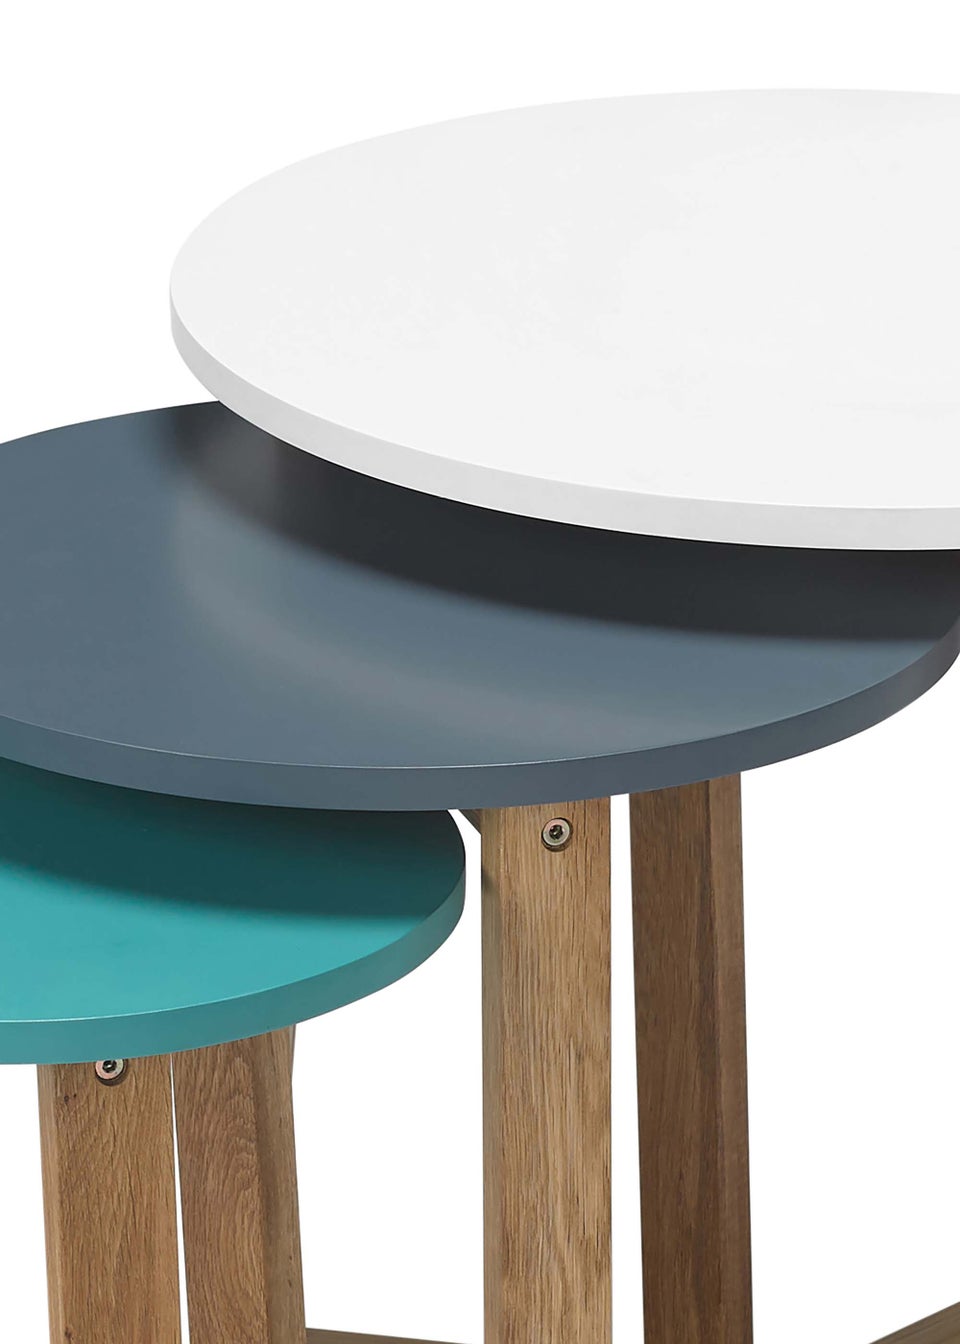 LPD Furniture Jasper Nest Tables Coloured Tops